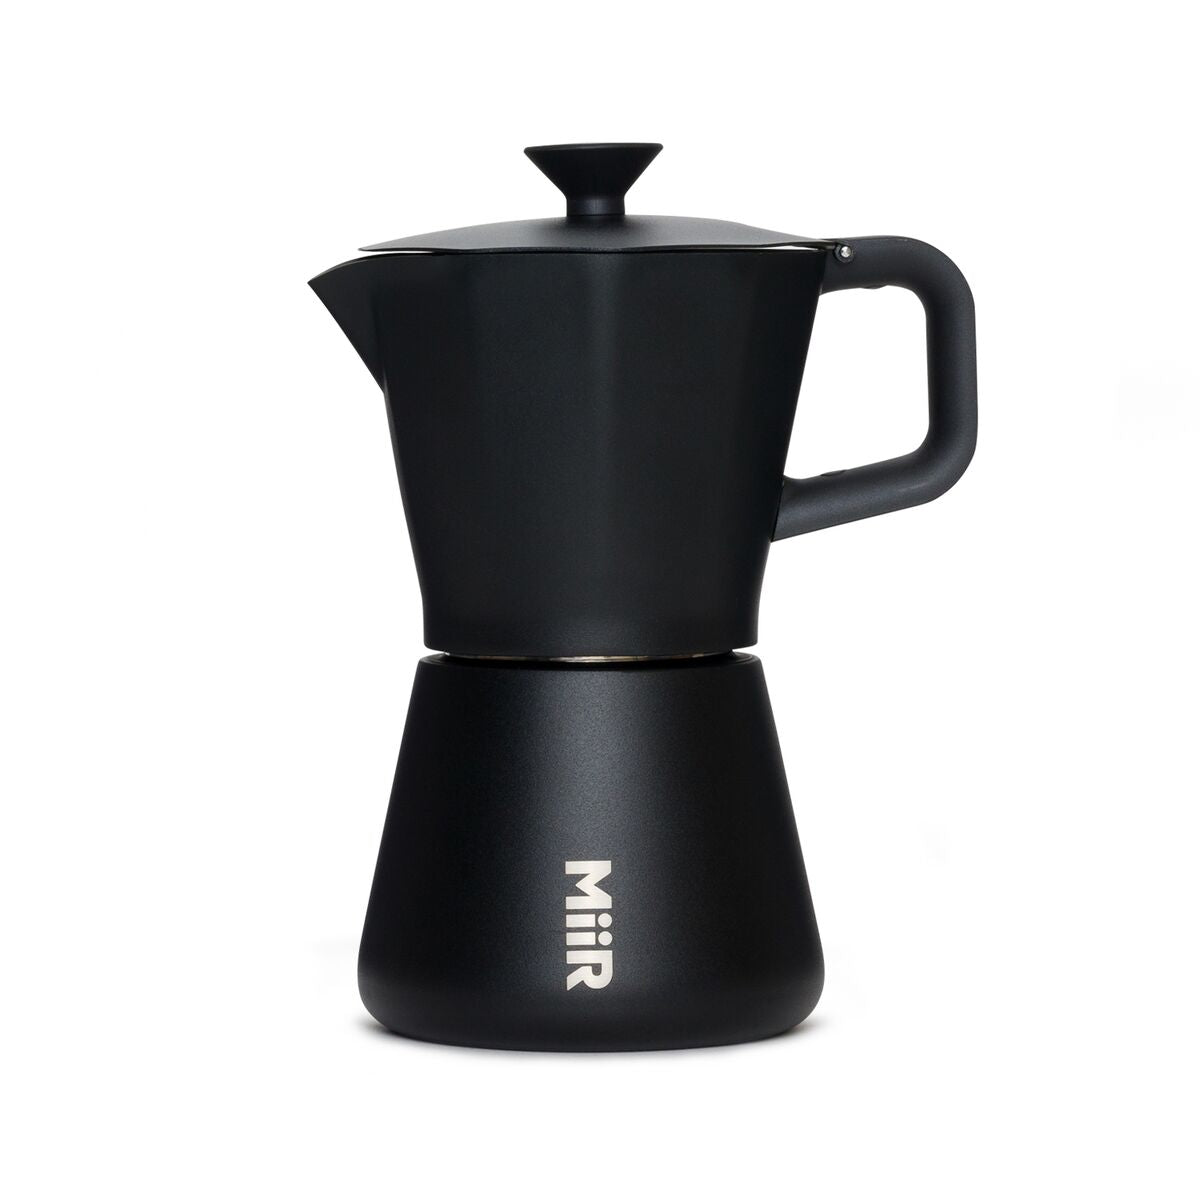 Moka induction caffettiera coffee maker espresso pot 6 cups